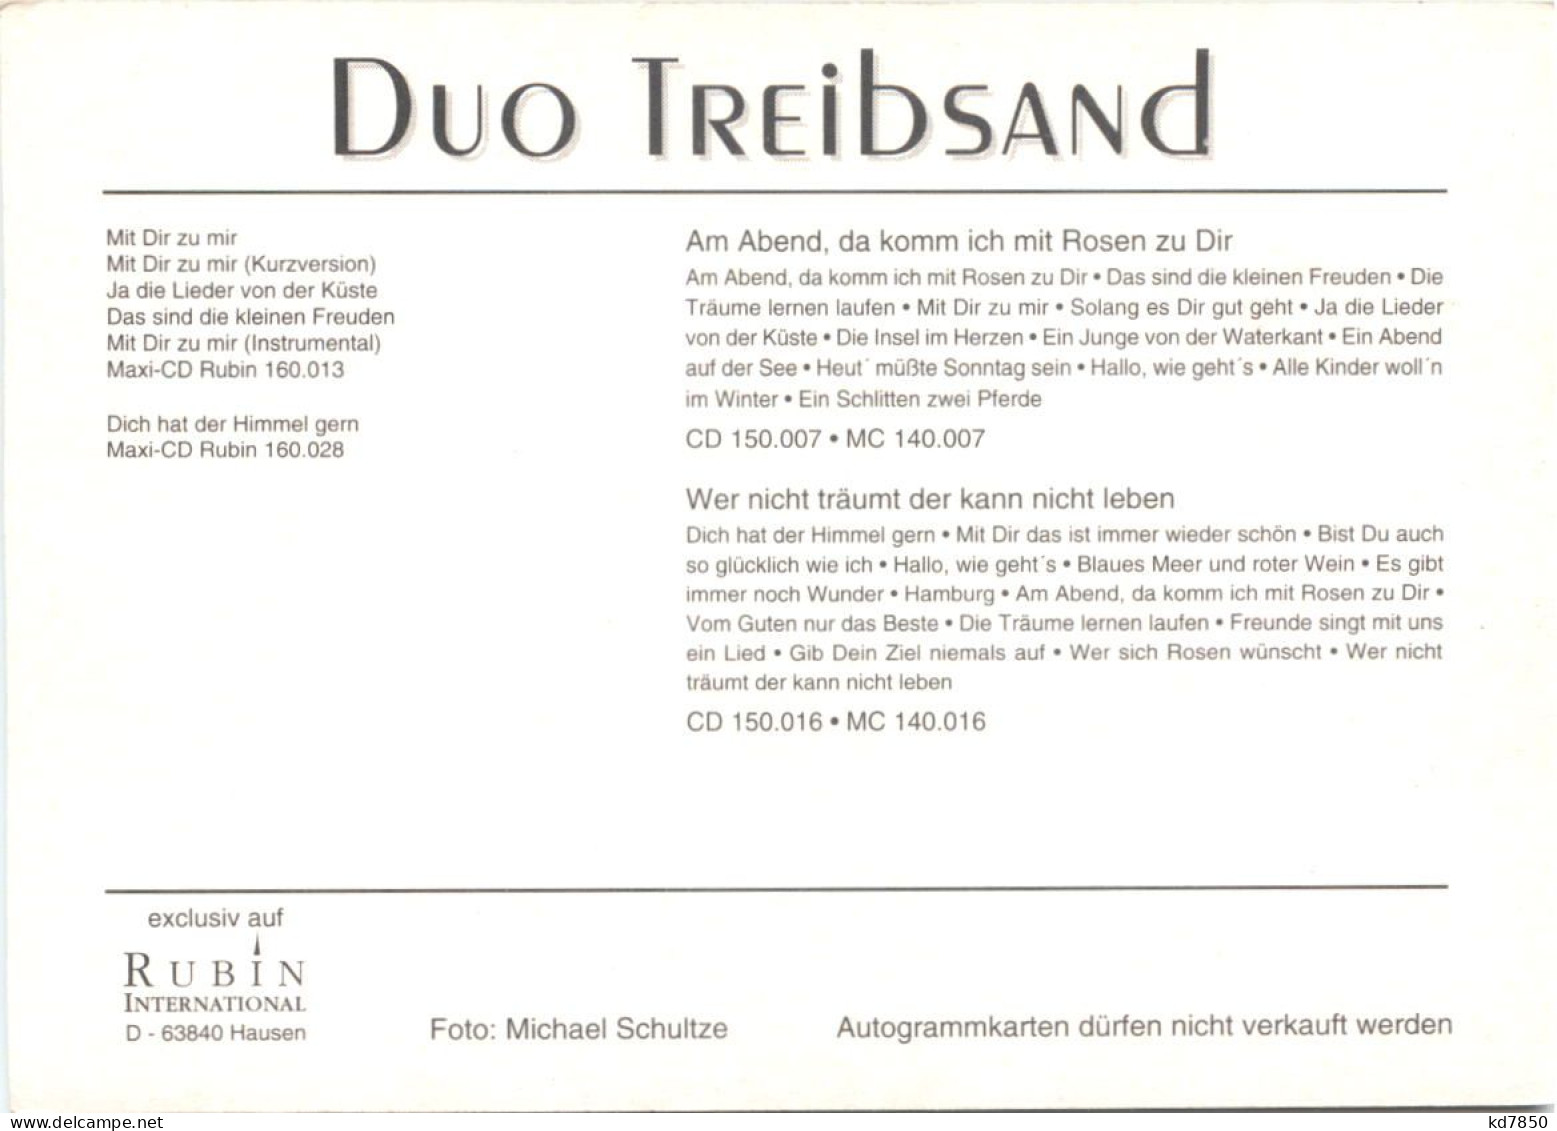 Duo Treibsand - Singers & Musicians